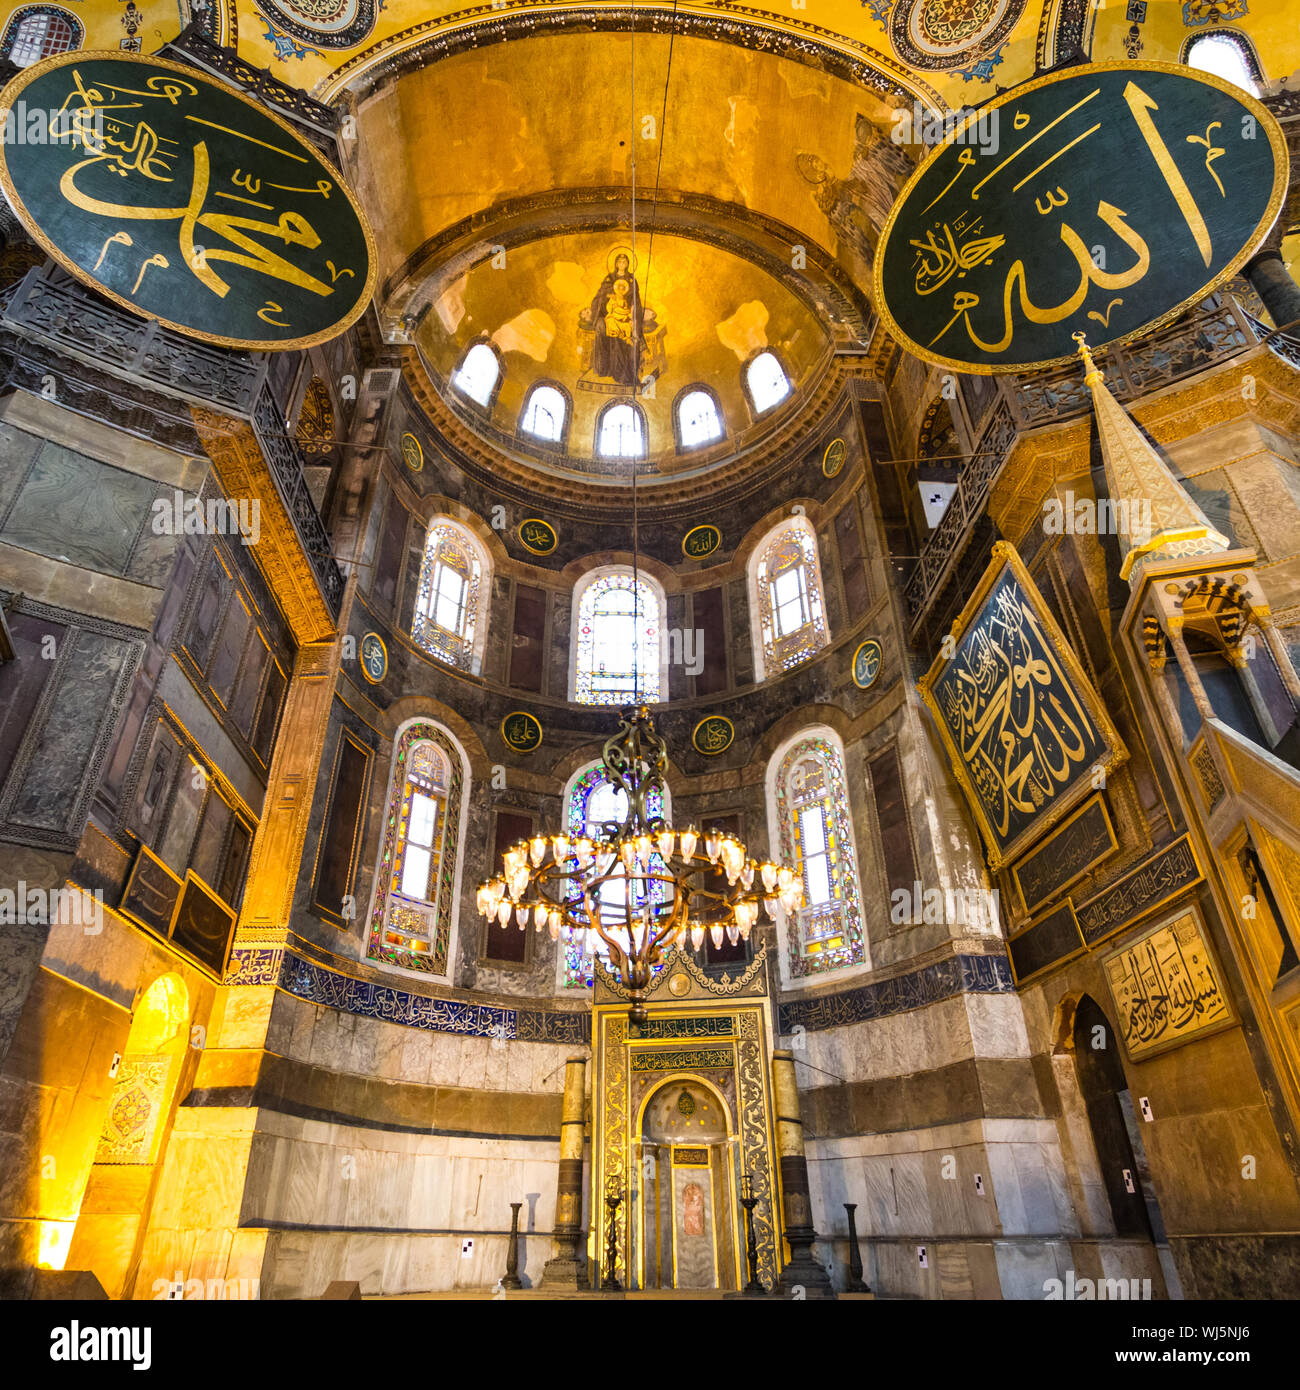 Interior Of The Hagia Sophia A Former Greek Orthodox